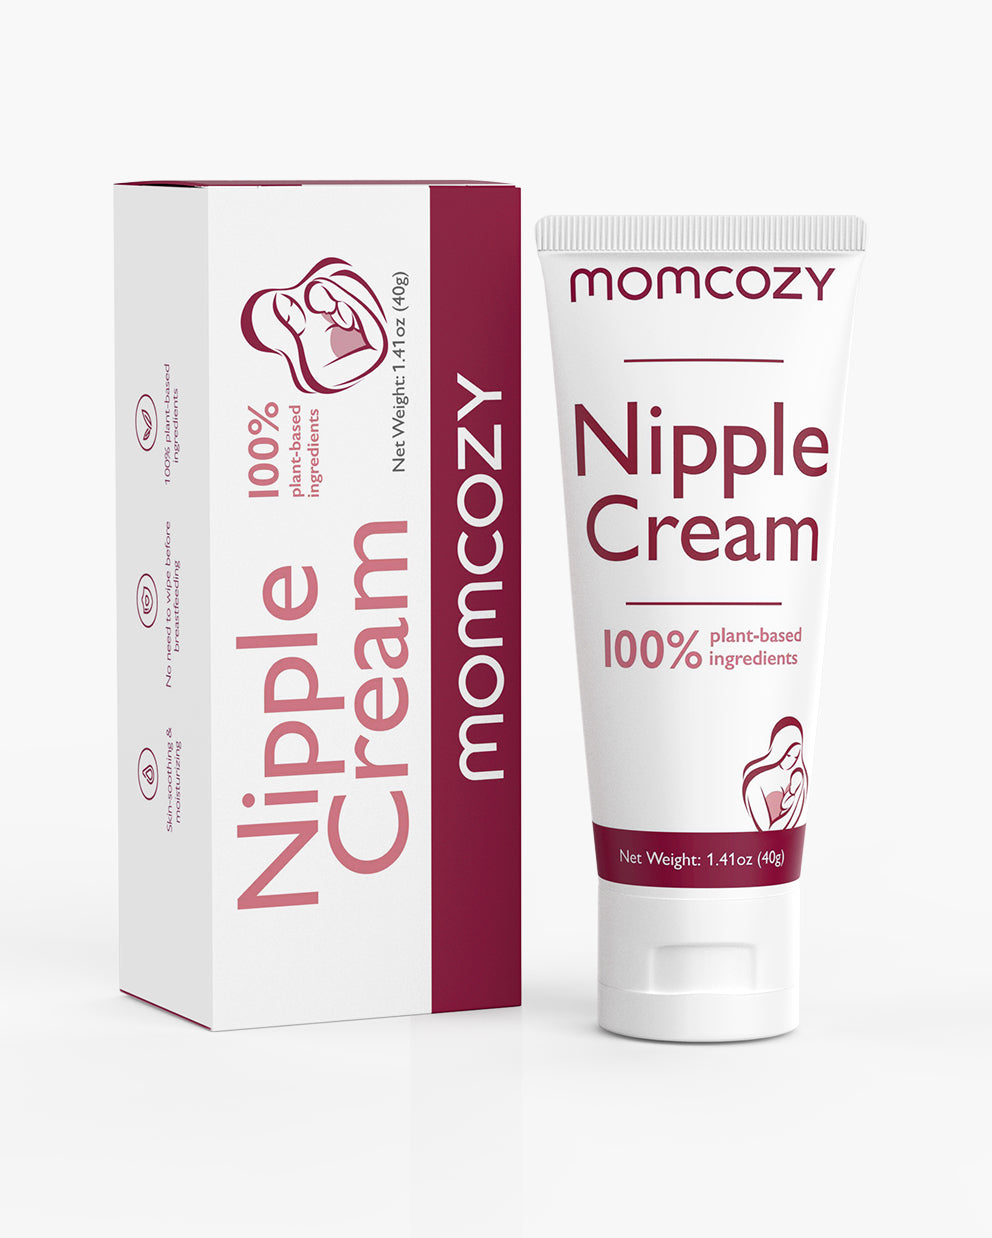 100% Natural Nipple Cream for Breastfeeding - Lanolin-free